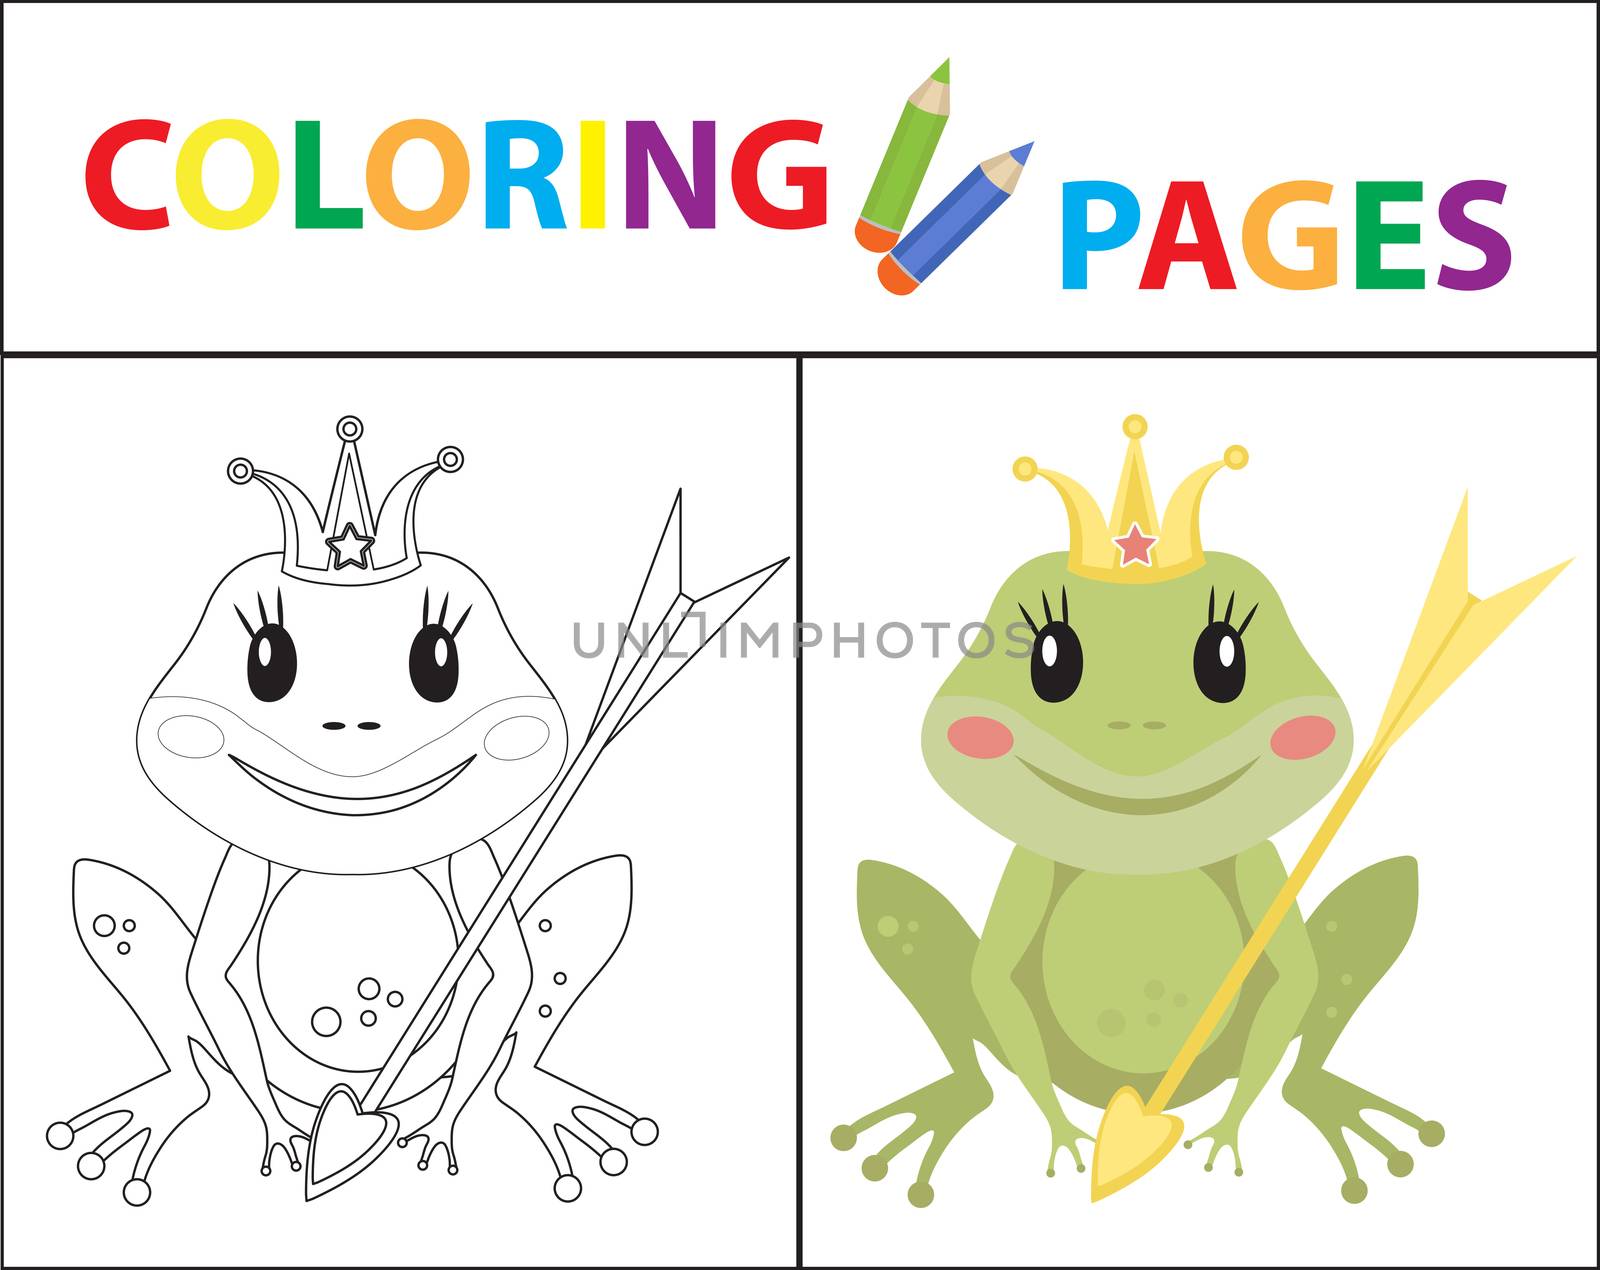 Coloring book page for kids. Frog princess Sketch outline and color version. Childrens education. illustration